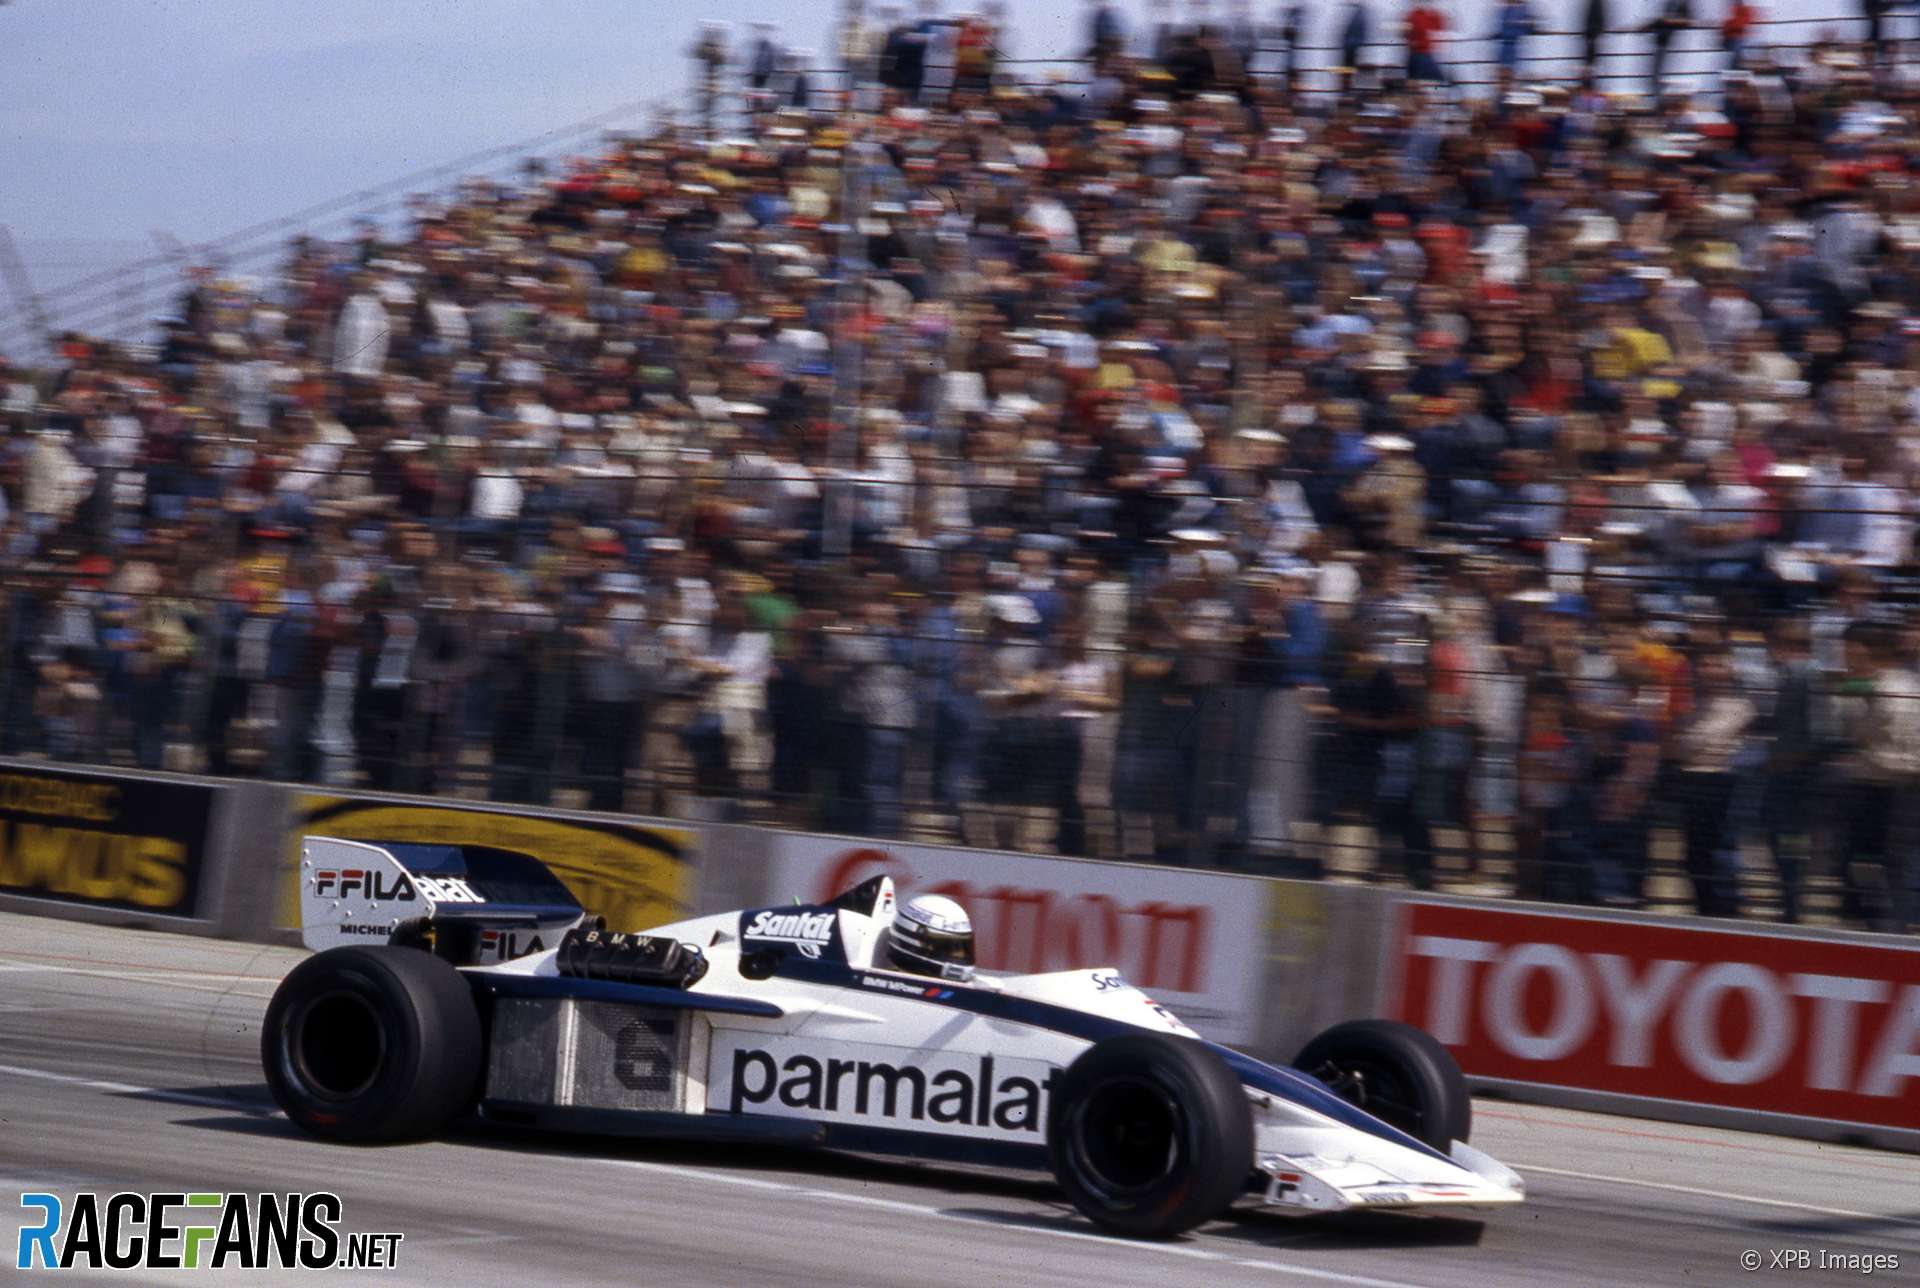 Riccardo Patrese, Brabham, Long Beach, 1983